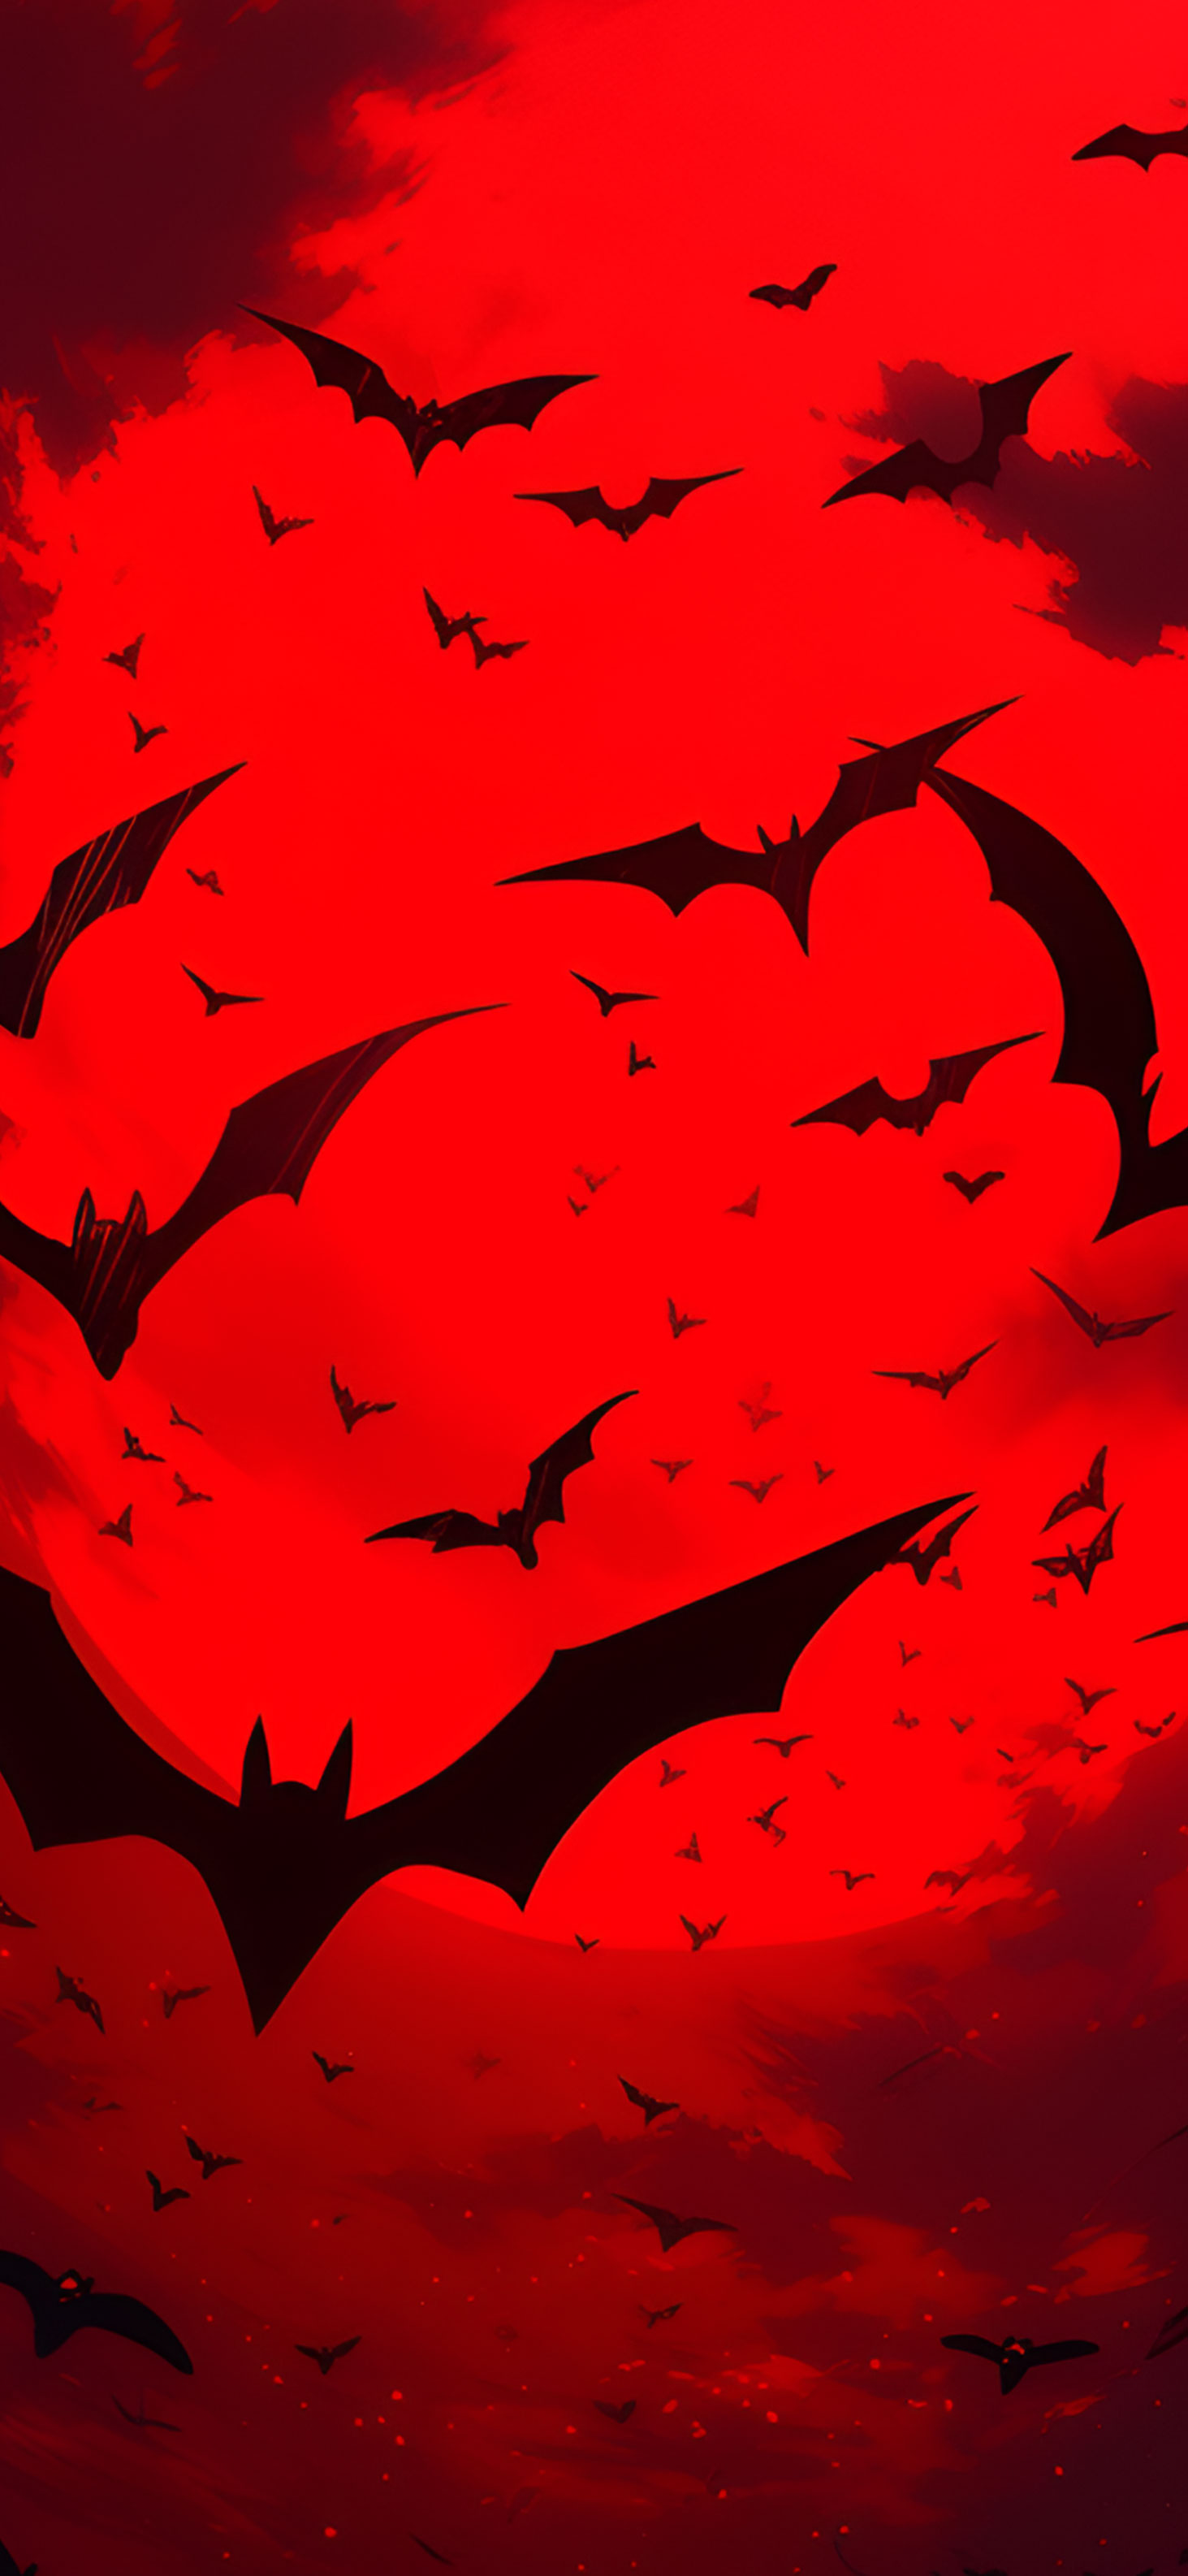 Bats in Red Sky Halloween Wallpaper Bats Wallpaper